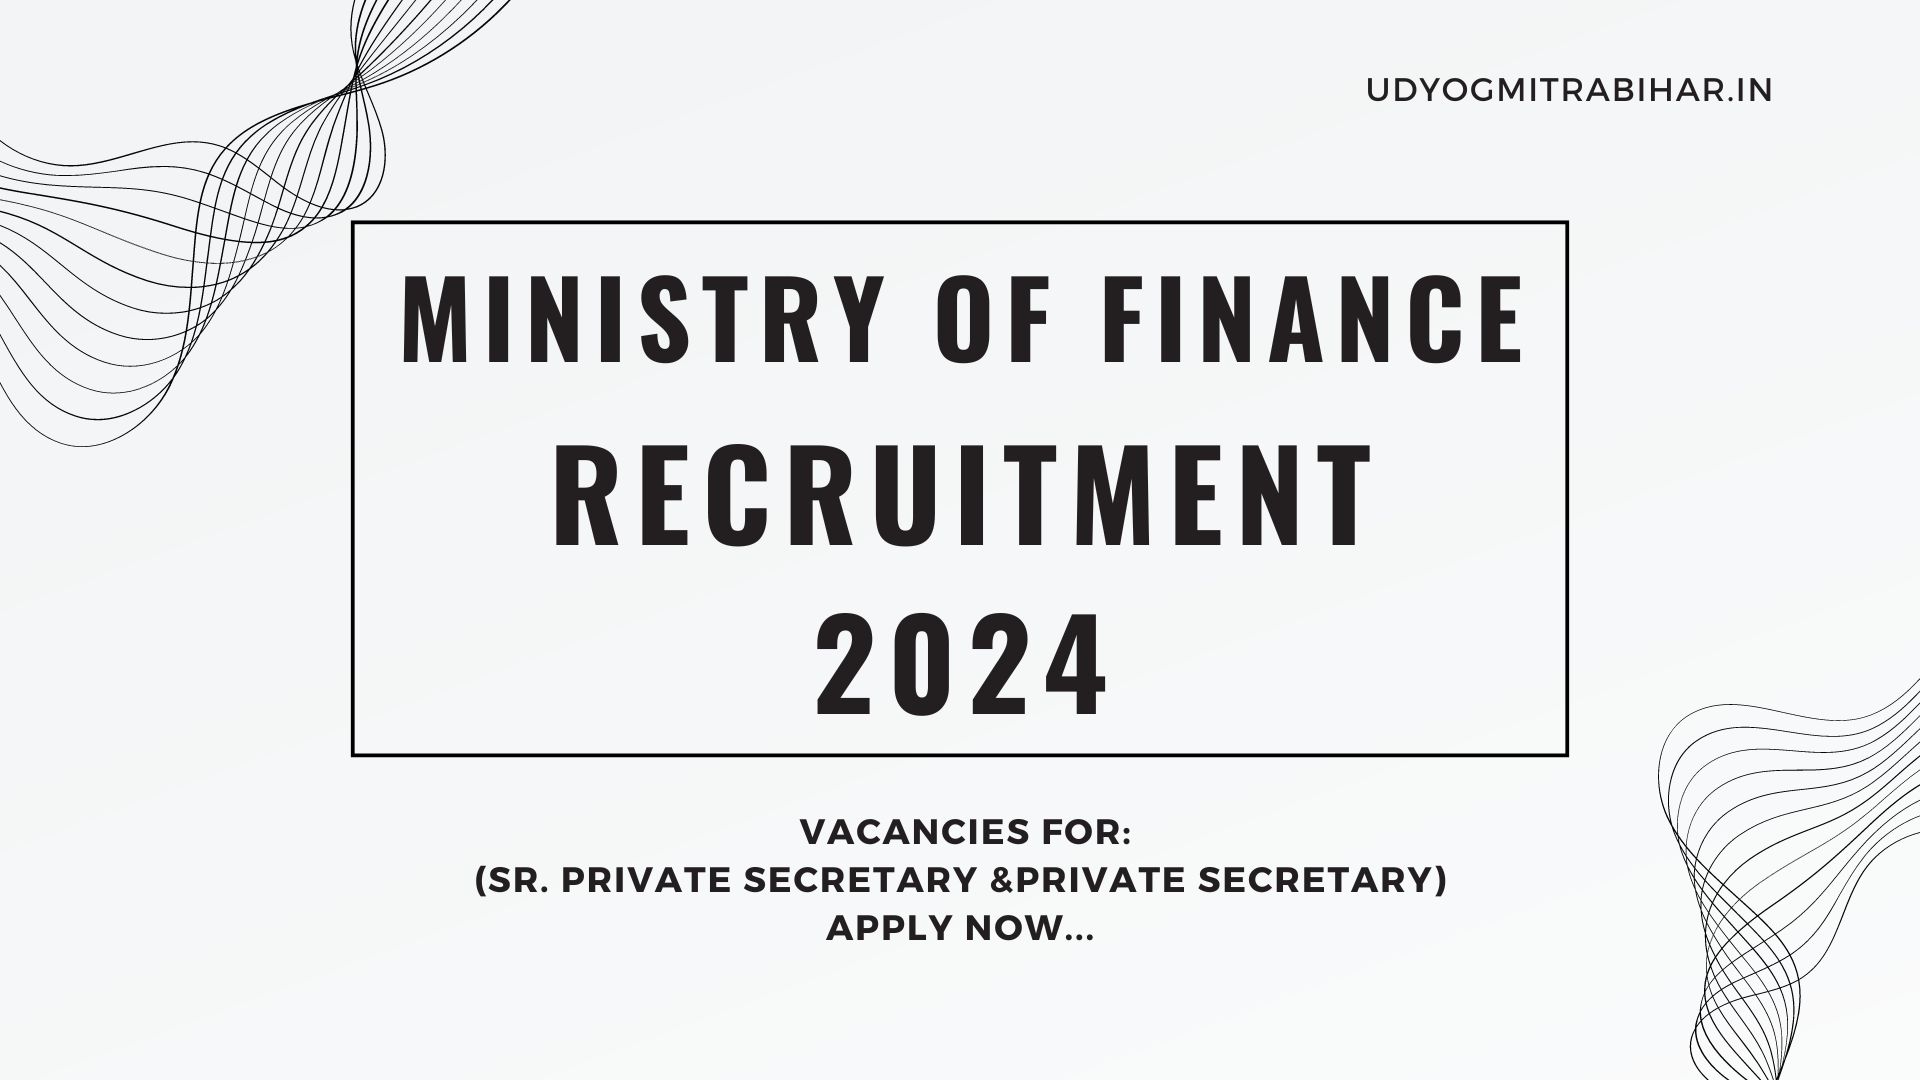 Ministry of Finance Secretary Recruitment 2024 for Secretary Post, Application Process, Eligibility Criteria, Salary